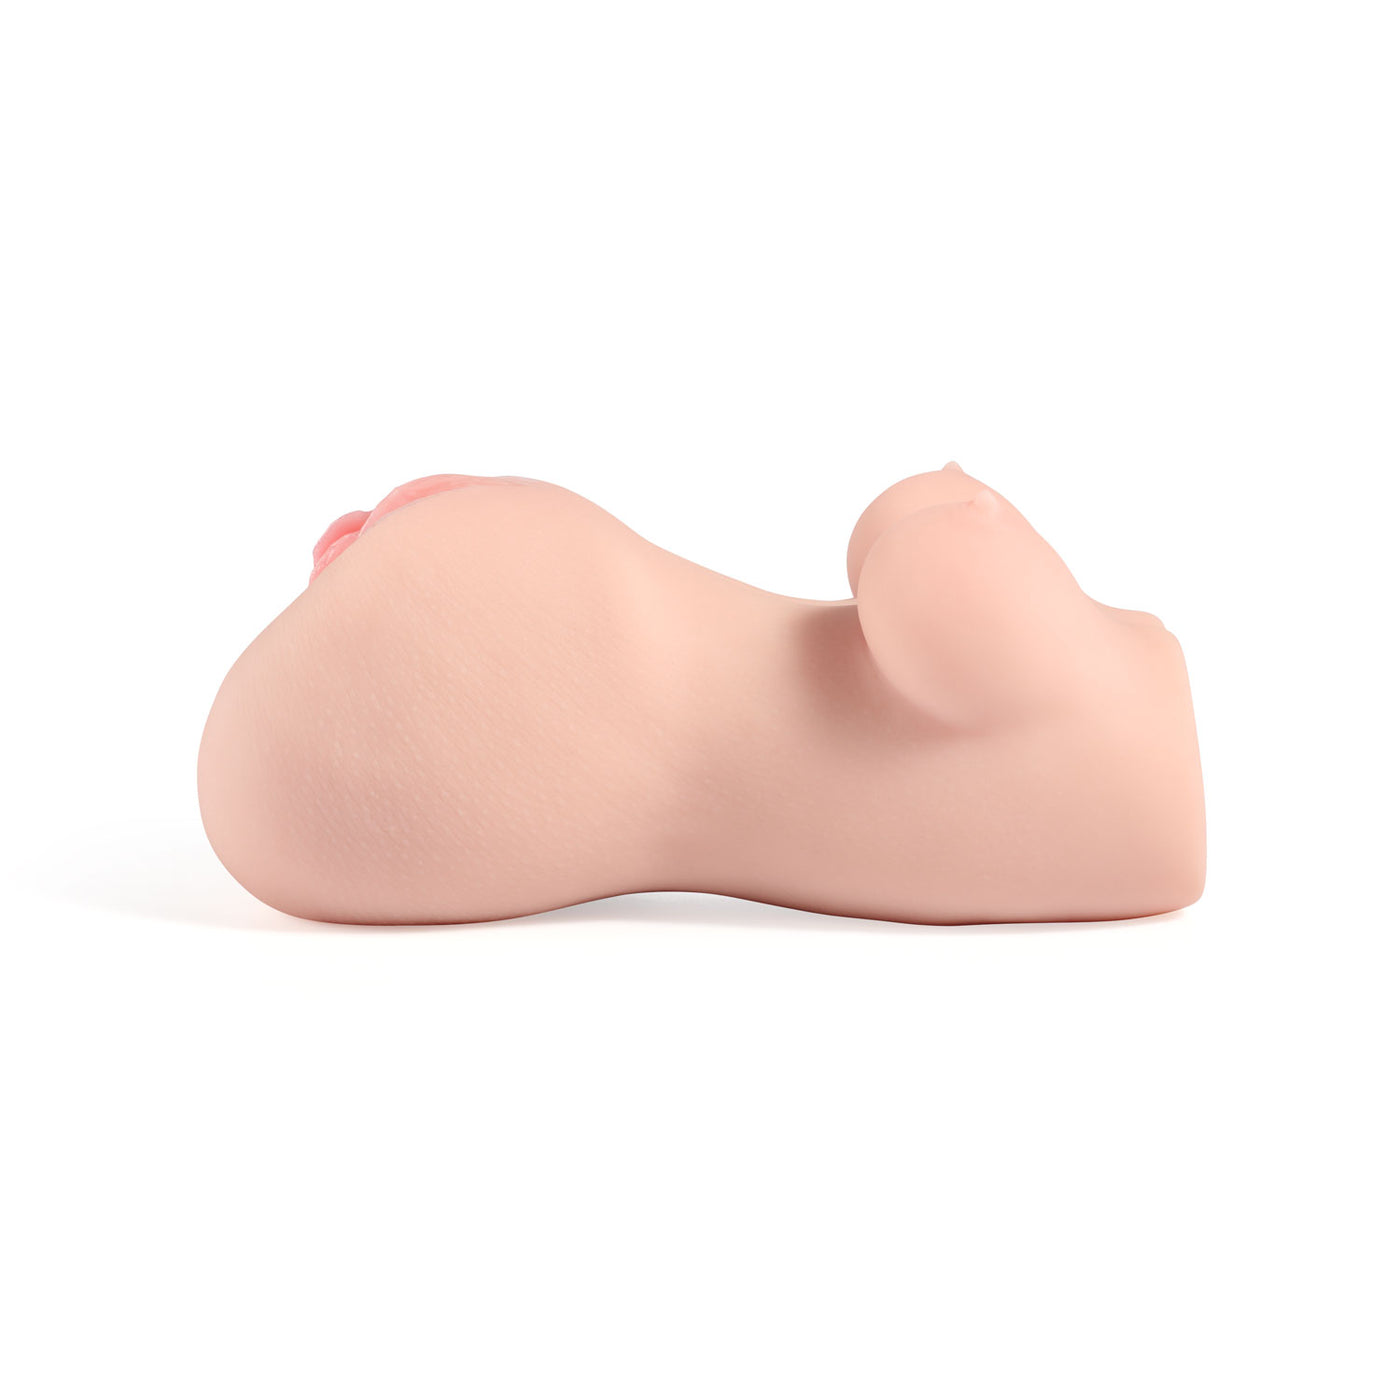 US Stock - TPE Cheap Best Pocket Pussy Half Body Torso Portable Masturbator With Small Boobs For Vagina&Anal Sex